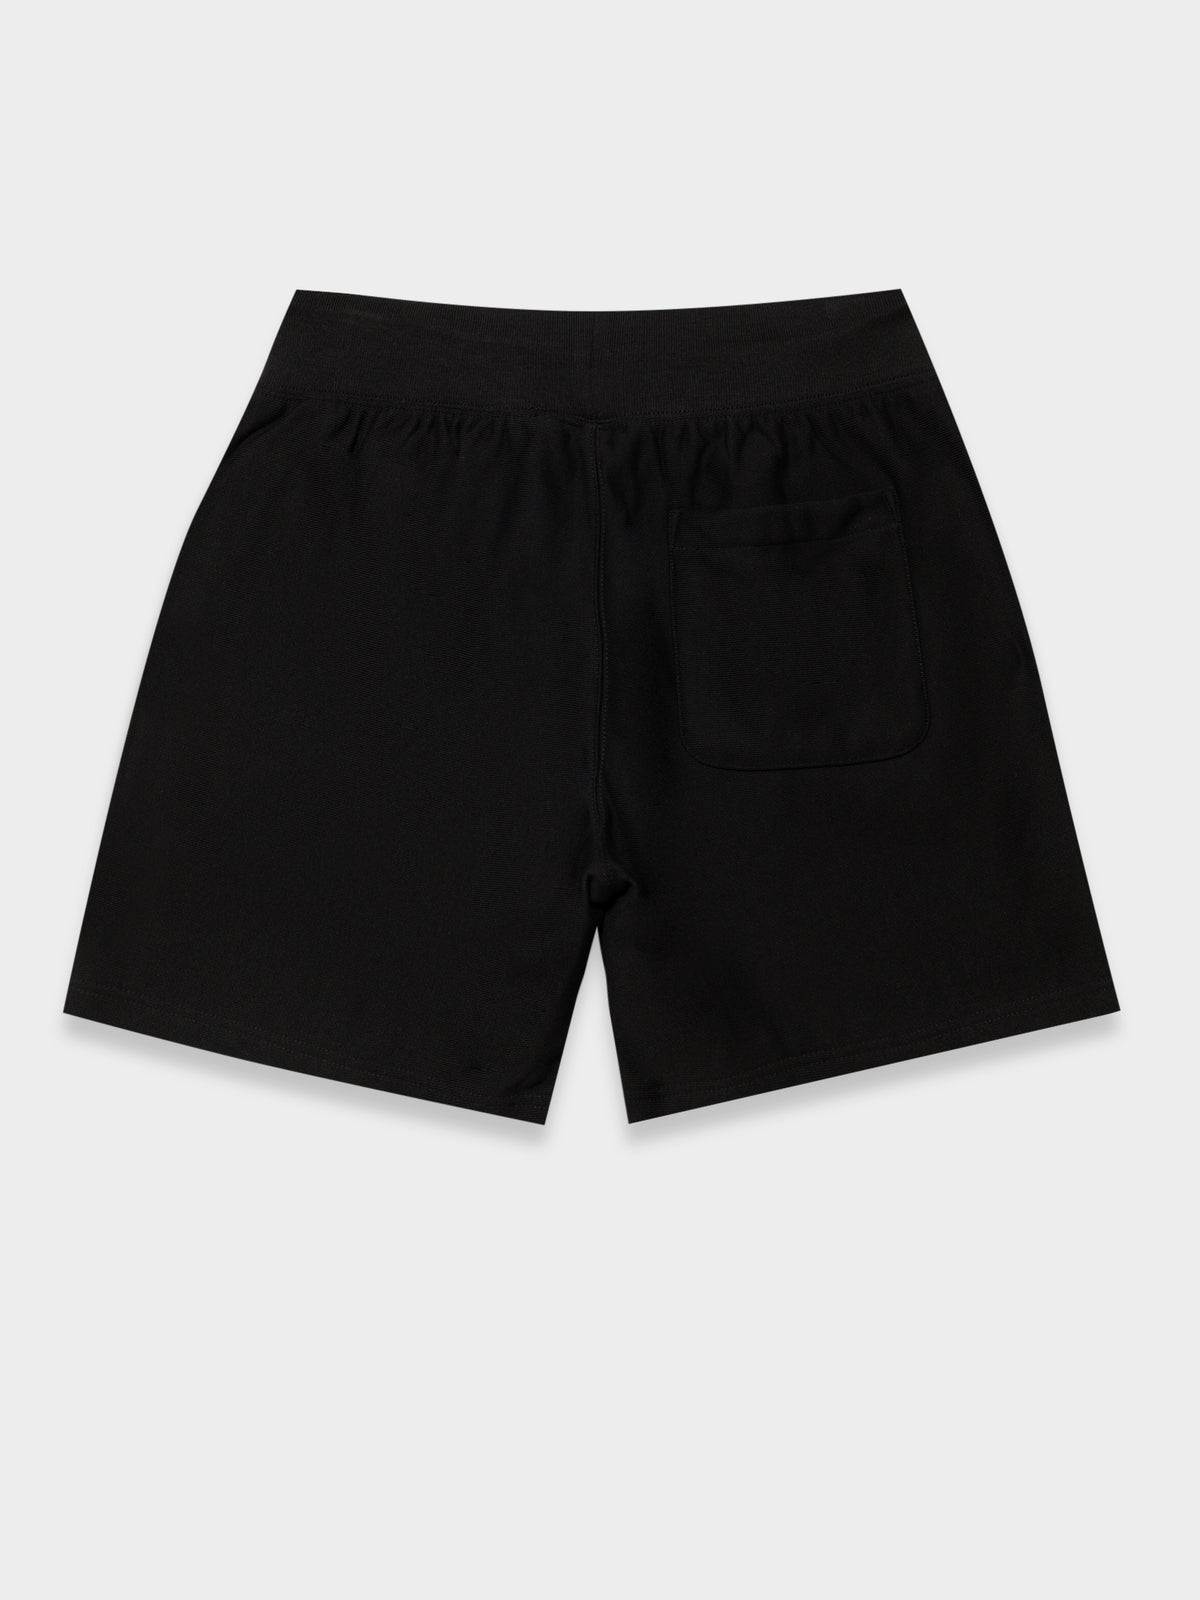 Reverse Weave Shorts in Black